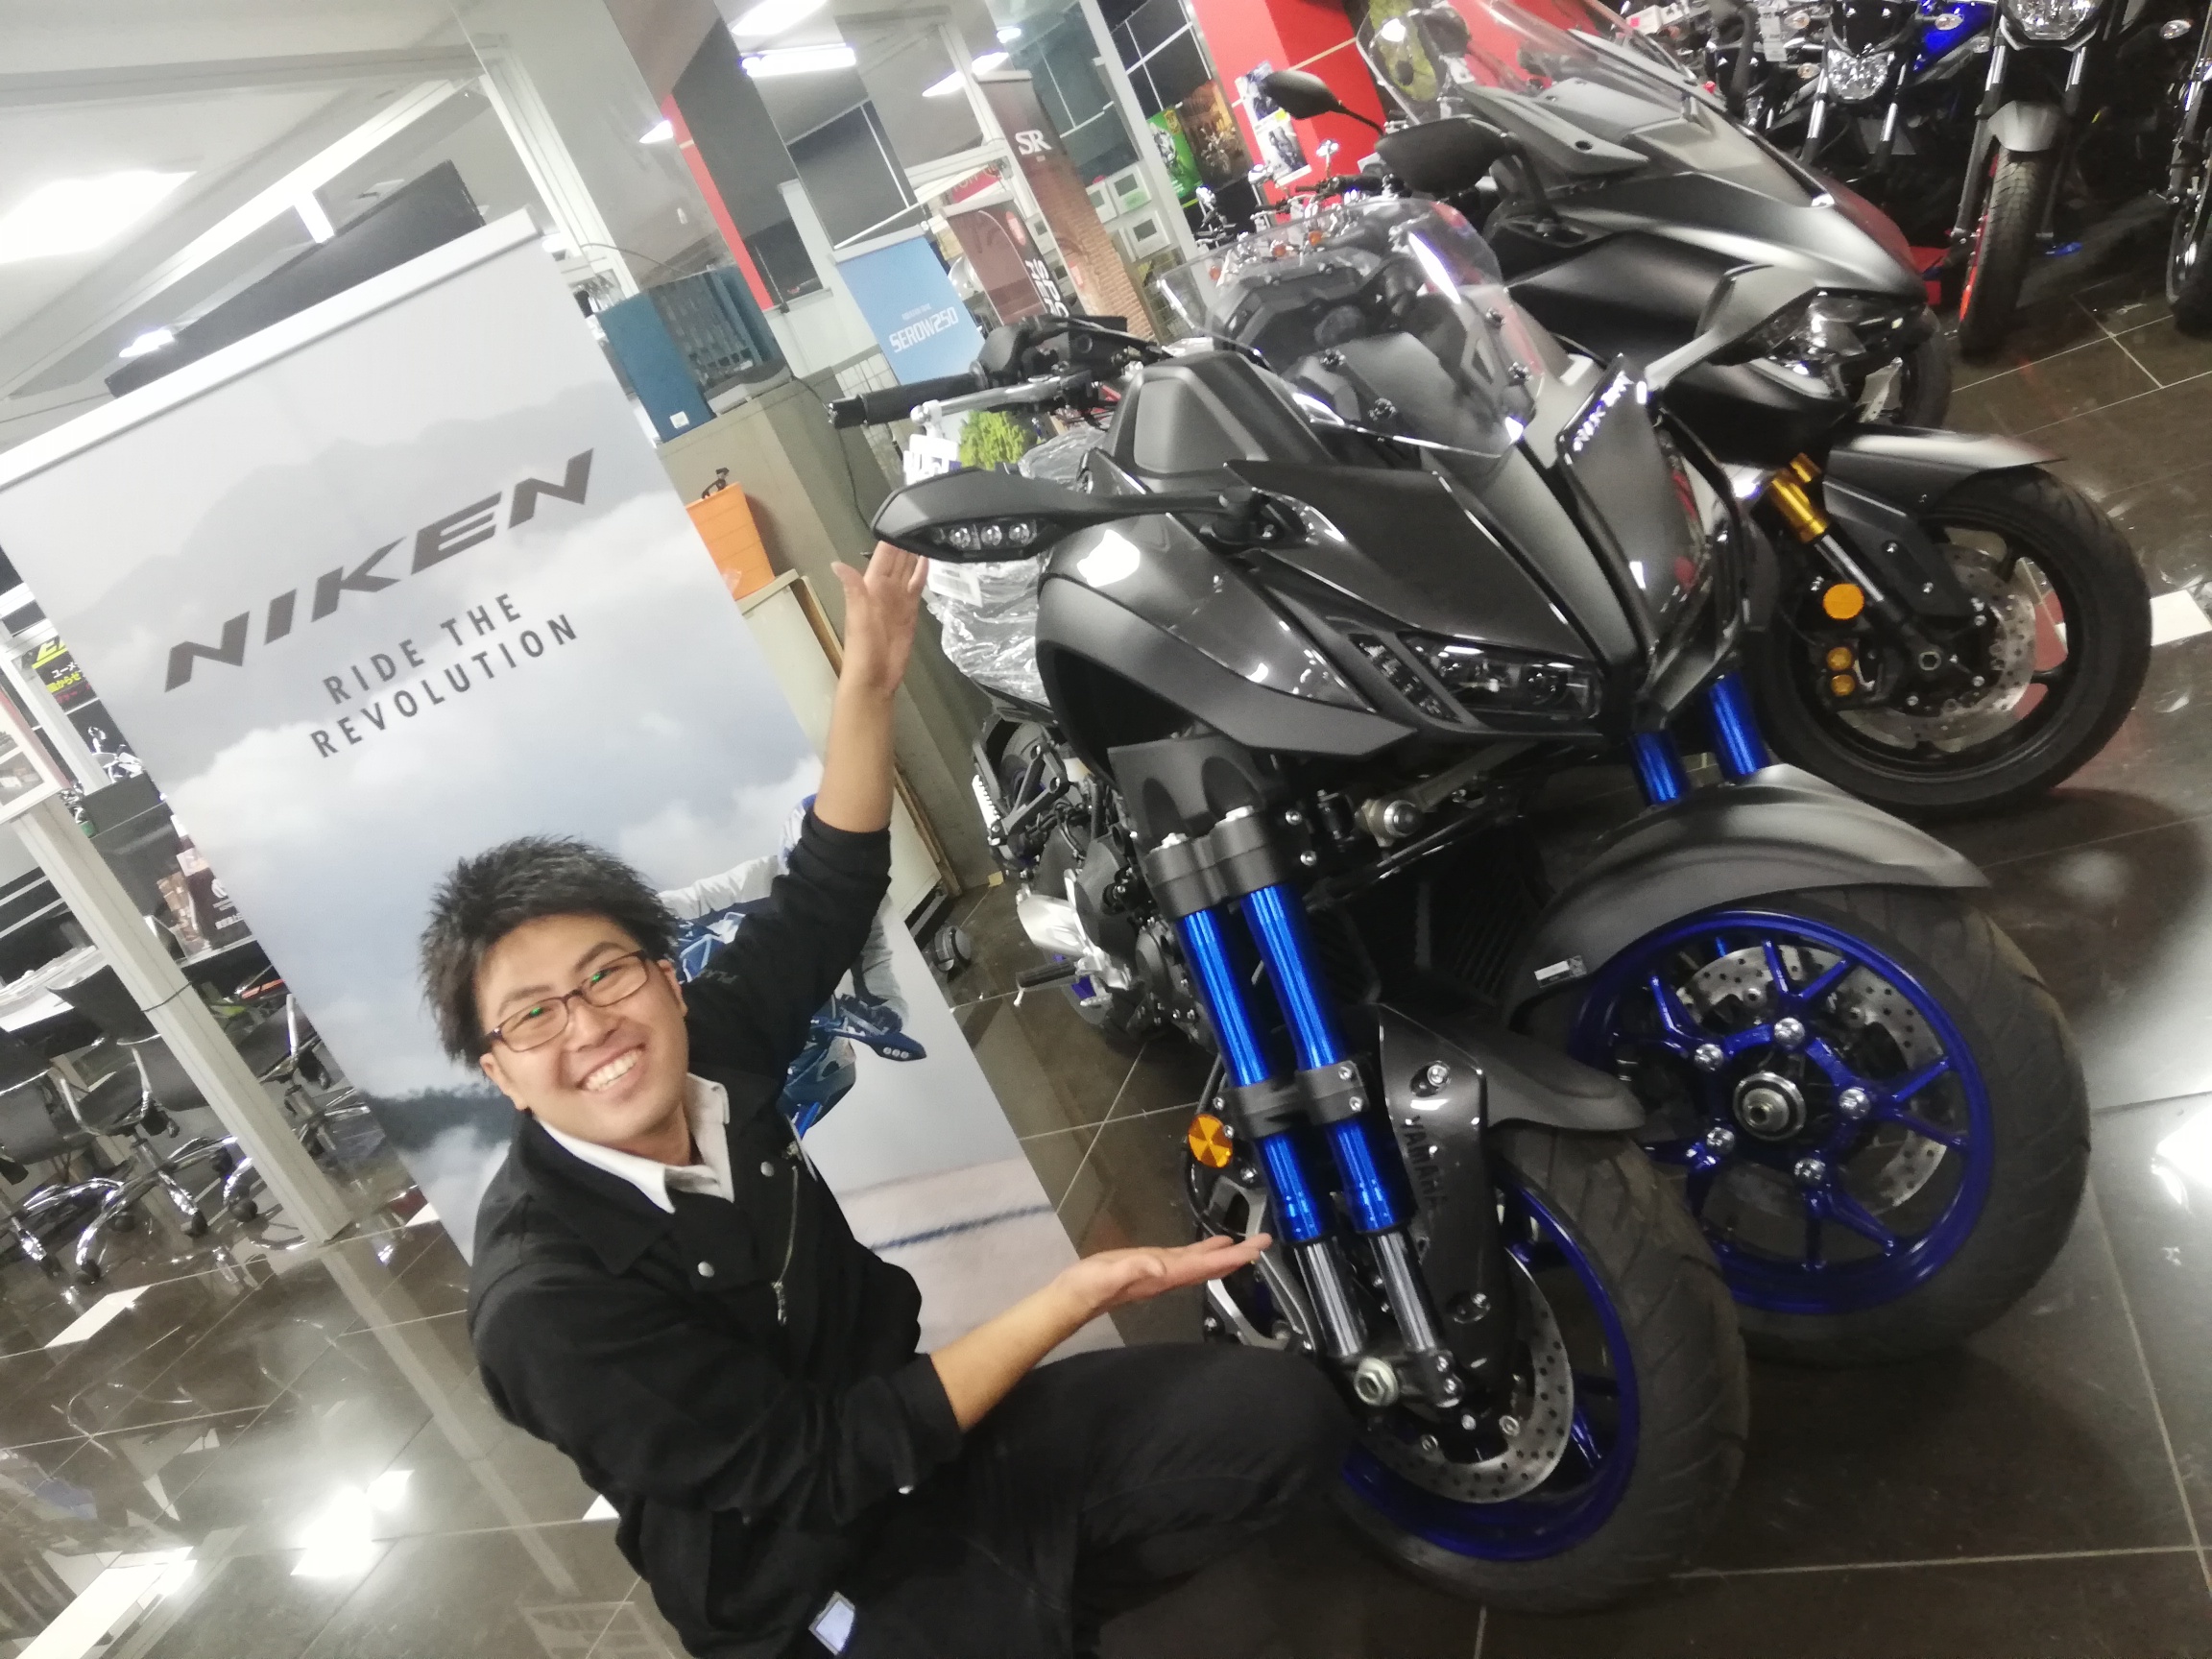 Nikenオーナーズミーティング開催 最新情報 U Media ユーメディア 中古バイク 新車バイク探しの決定版 神奈川 東京でバイク探すならユーメディア